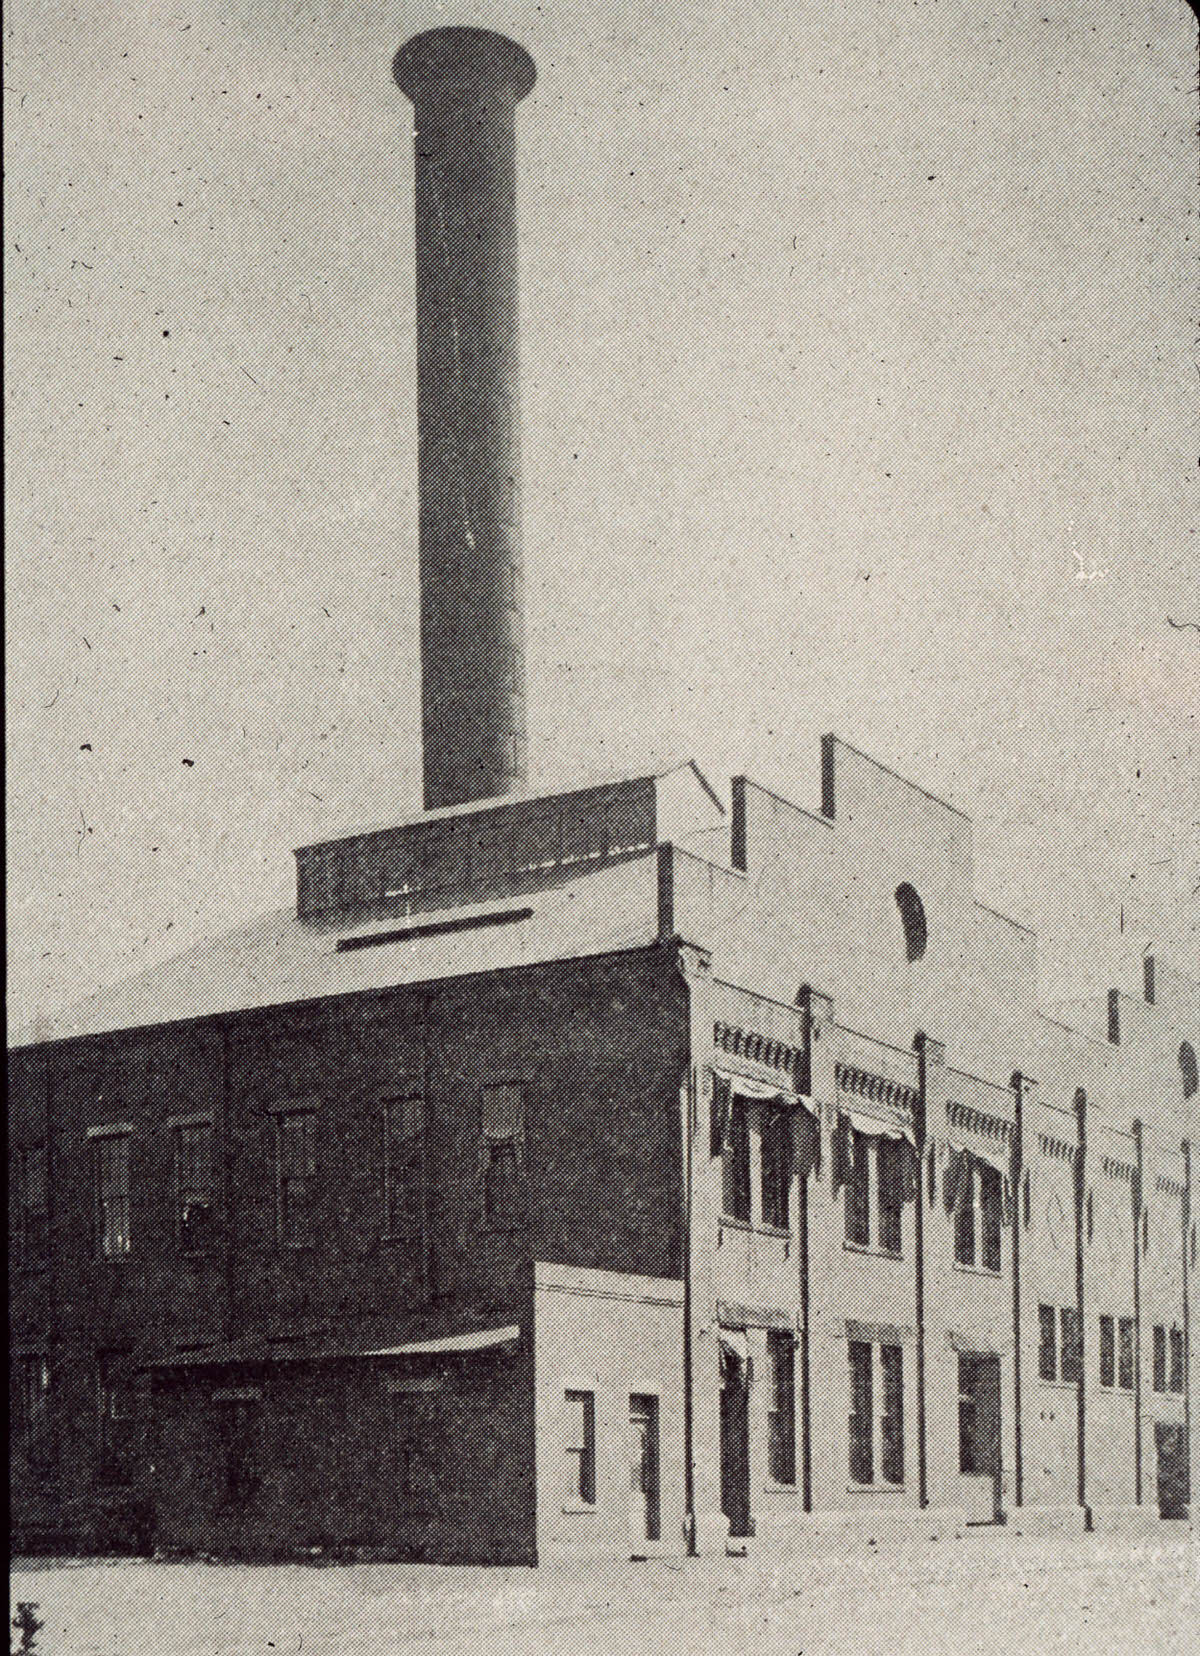 Columbus Edison Electric Light Company, 1888